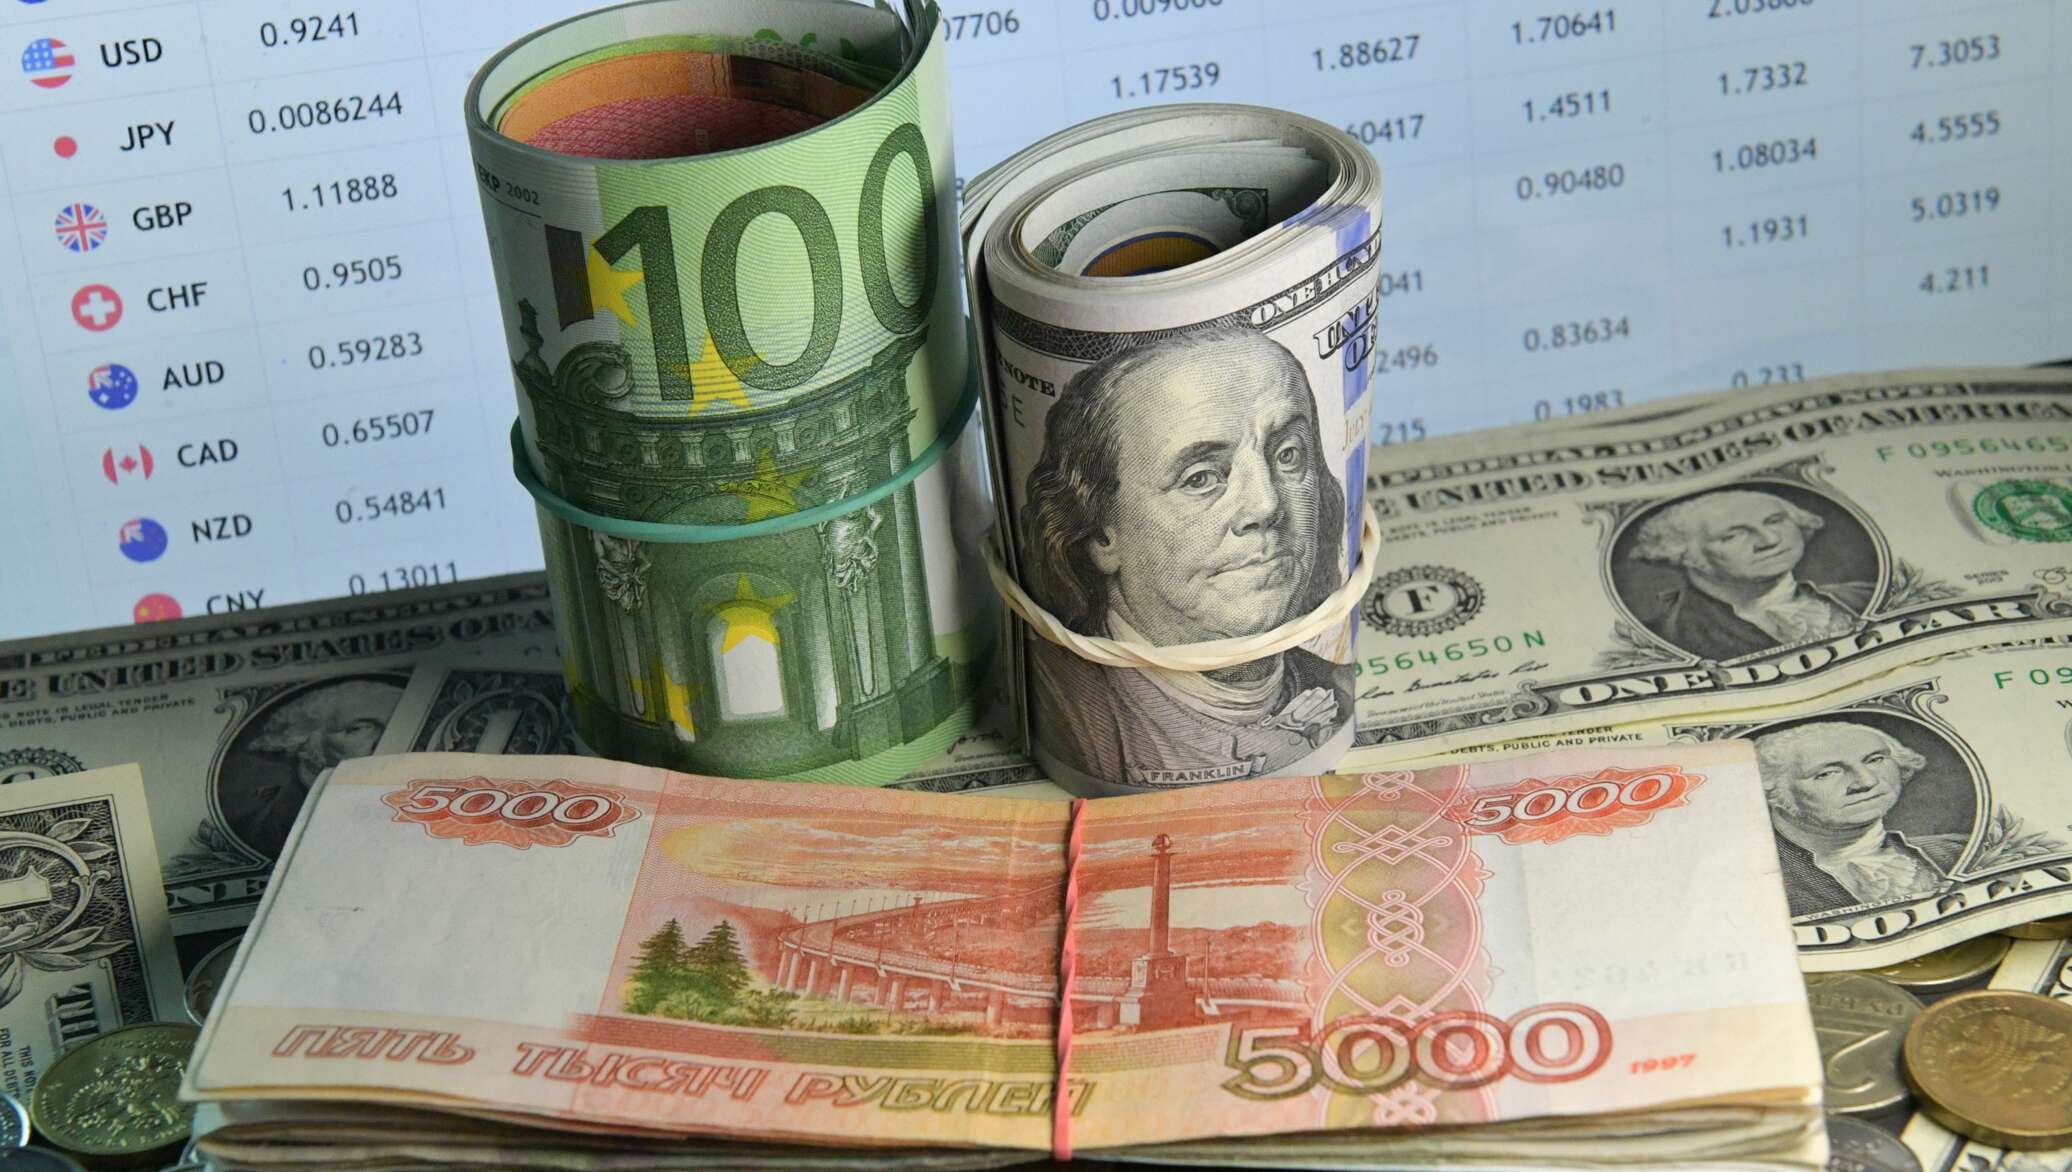 Доллар евро европа. Доллары в рубли. Доллар и евро. Доллар евро рубль. ГАЗ доллар.